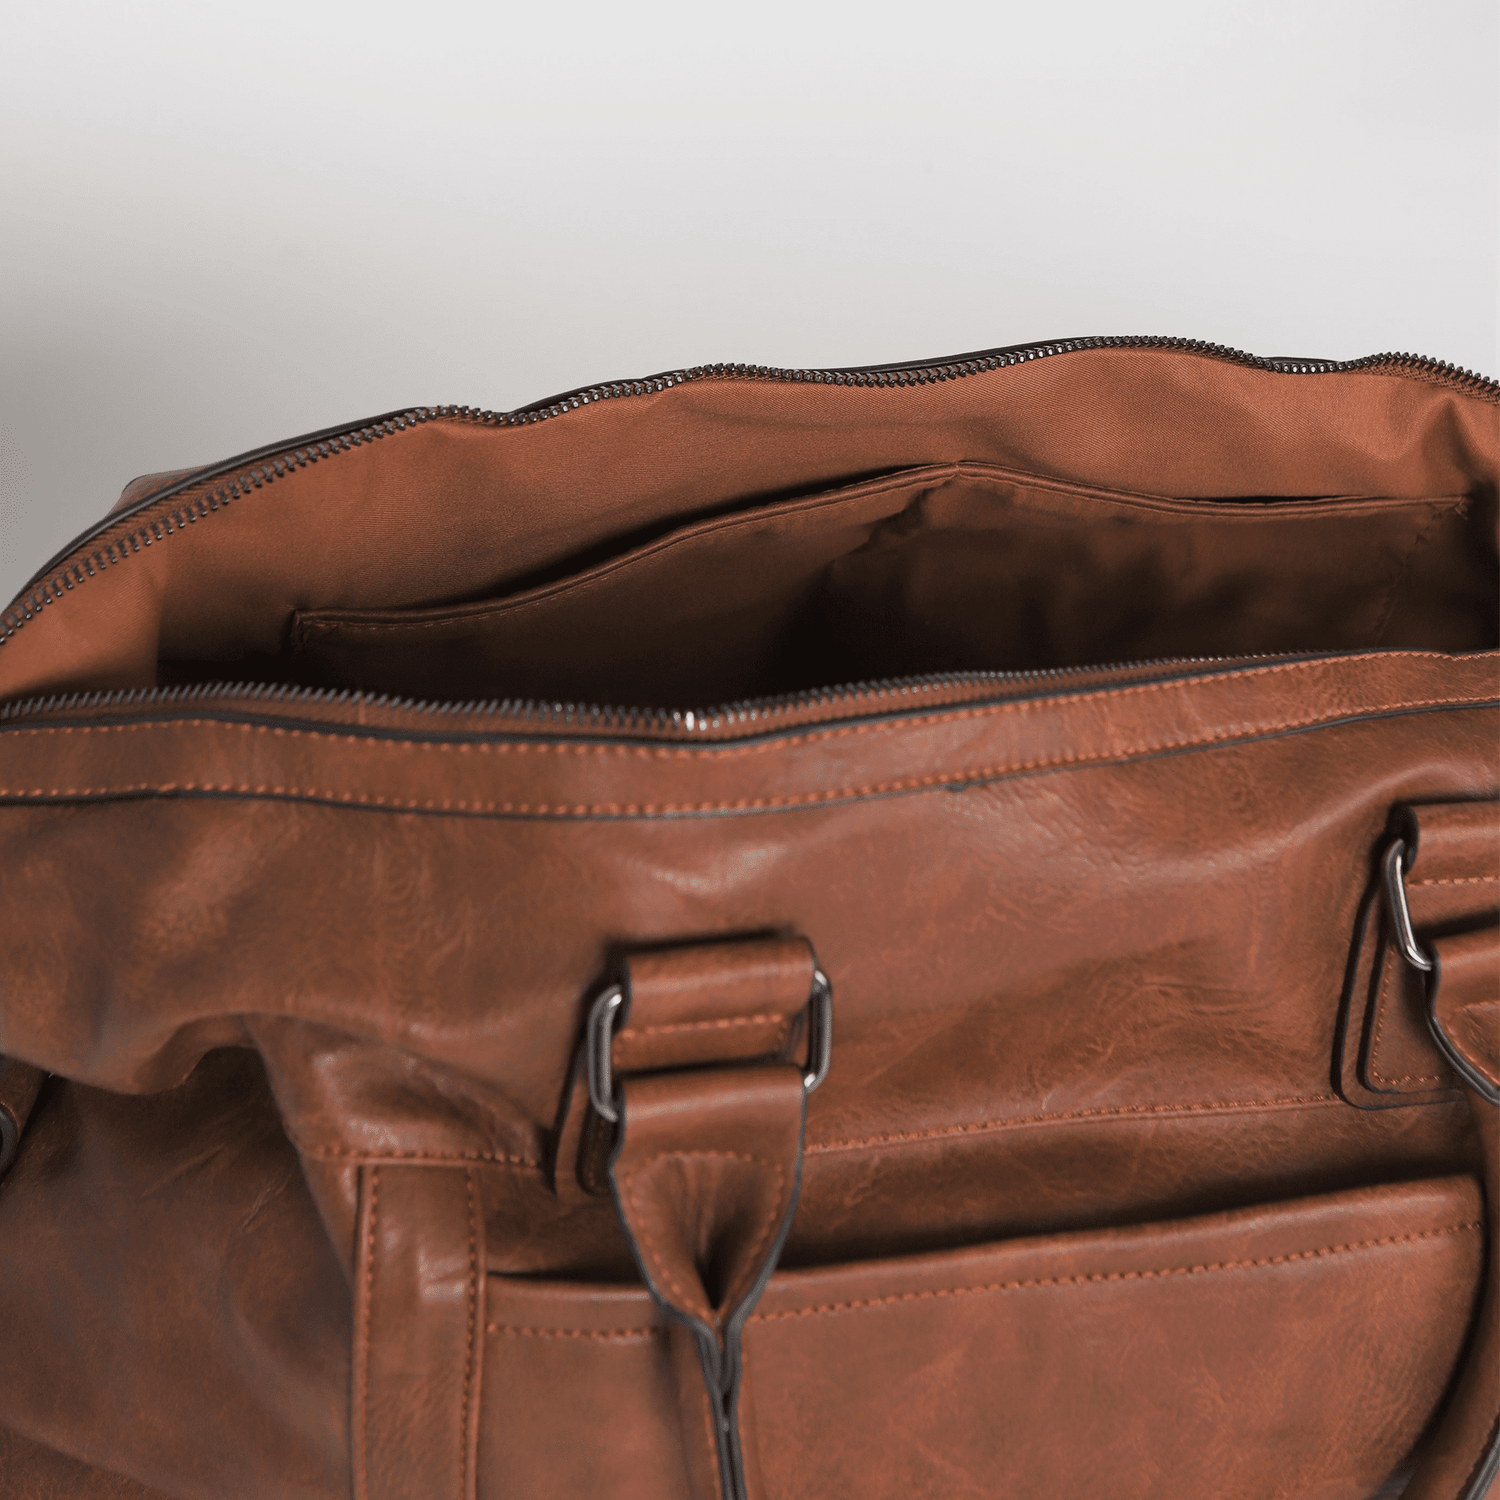 Men's Bags, Briefcase, Messenger, Shoulder, Holdall, Leather Bags